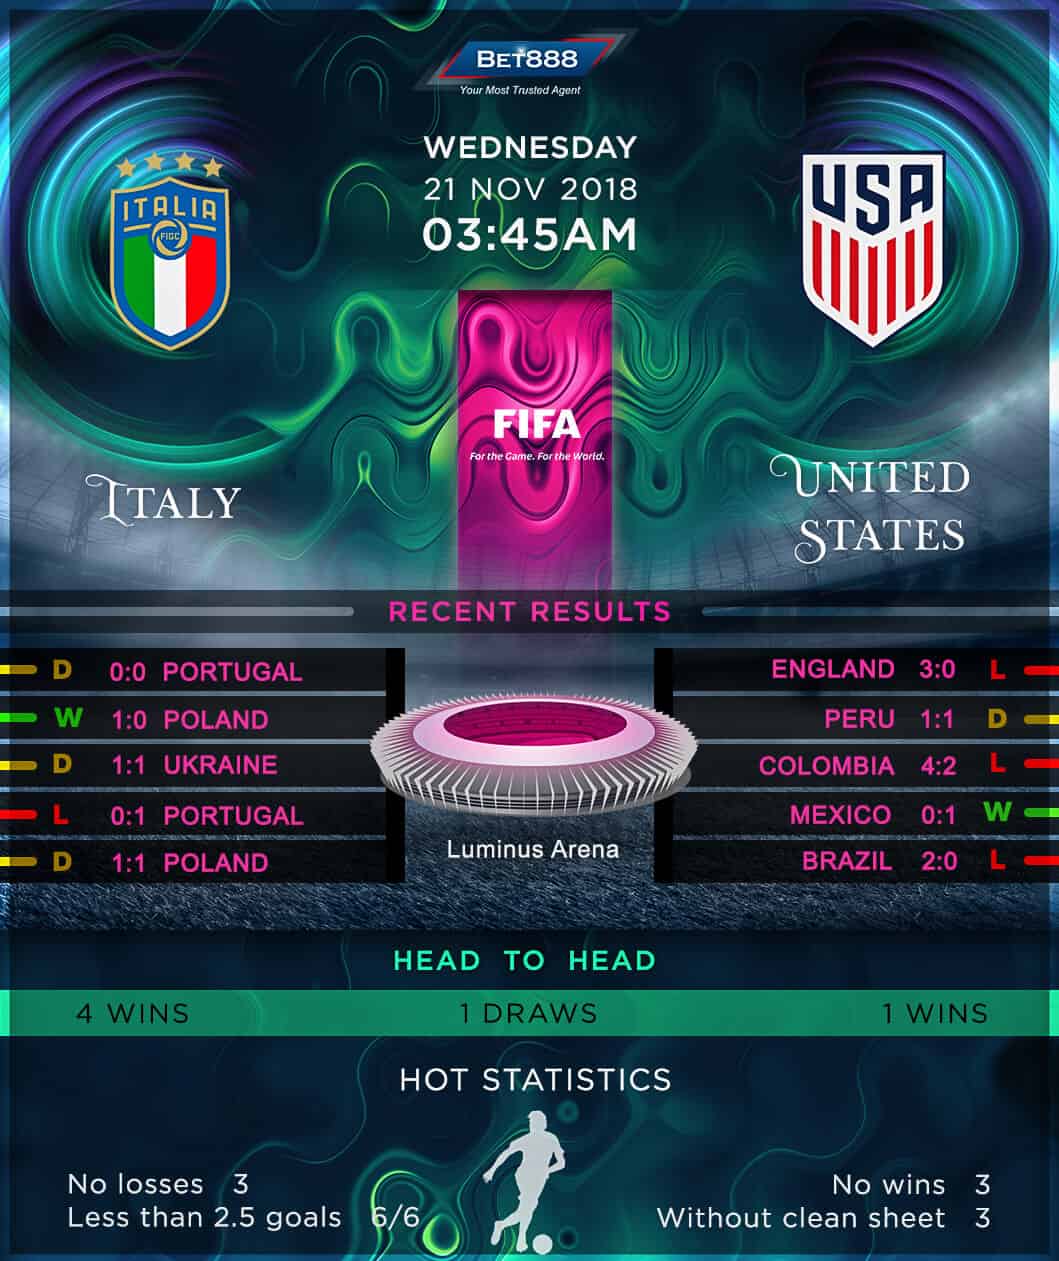 Italy vs United States 21/11/18